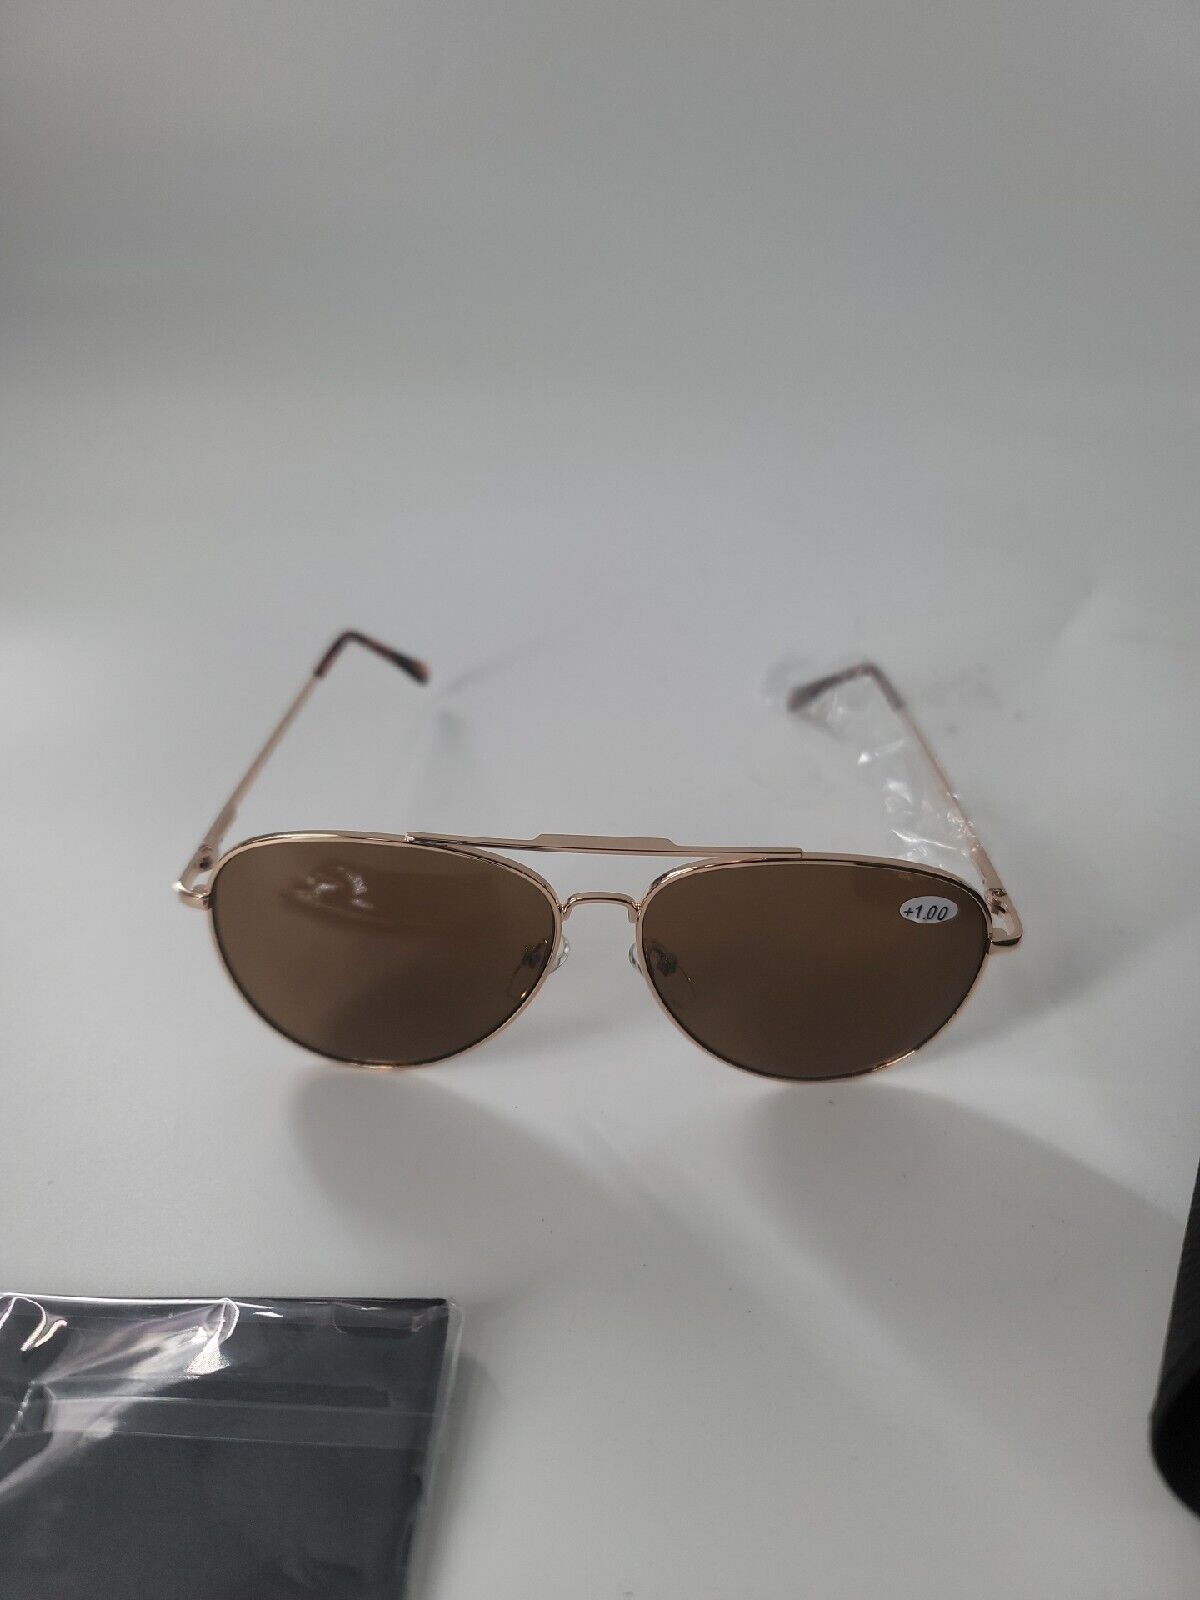 VVDQELLA Reading Sunglasses Readers, Aviator Stylish Full Frame UV400 Protection - Opticdeals